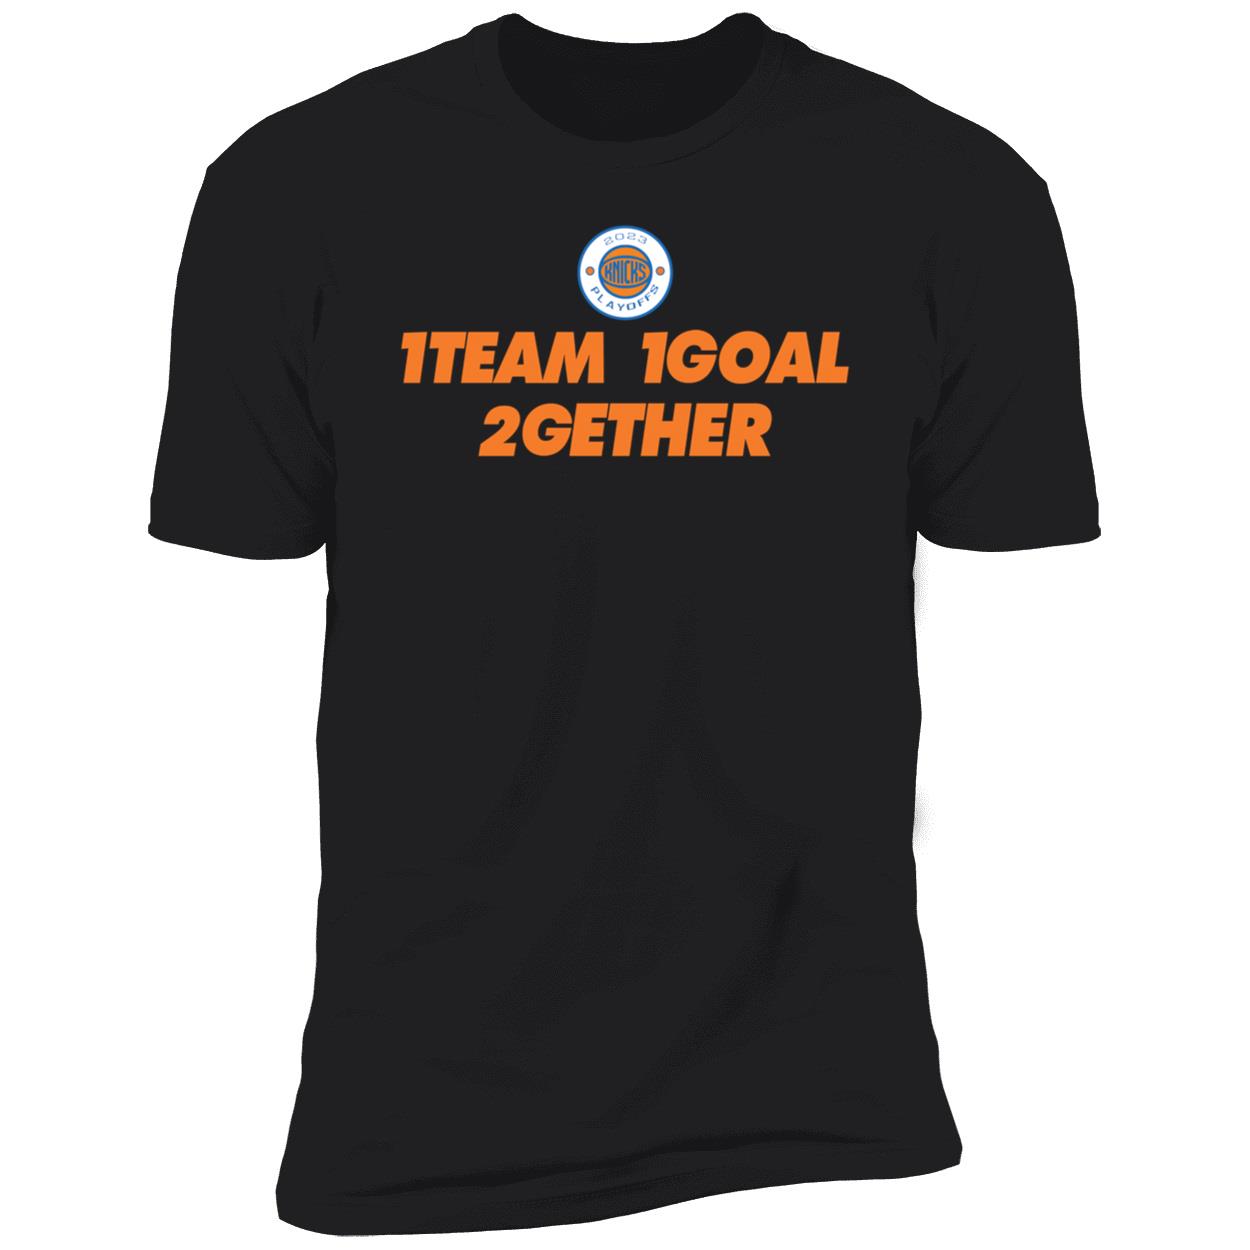 1Team 1 Goal 2Gether Premium SS Shirt